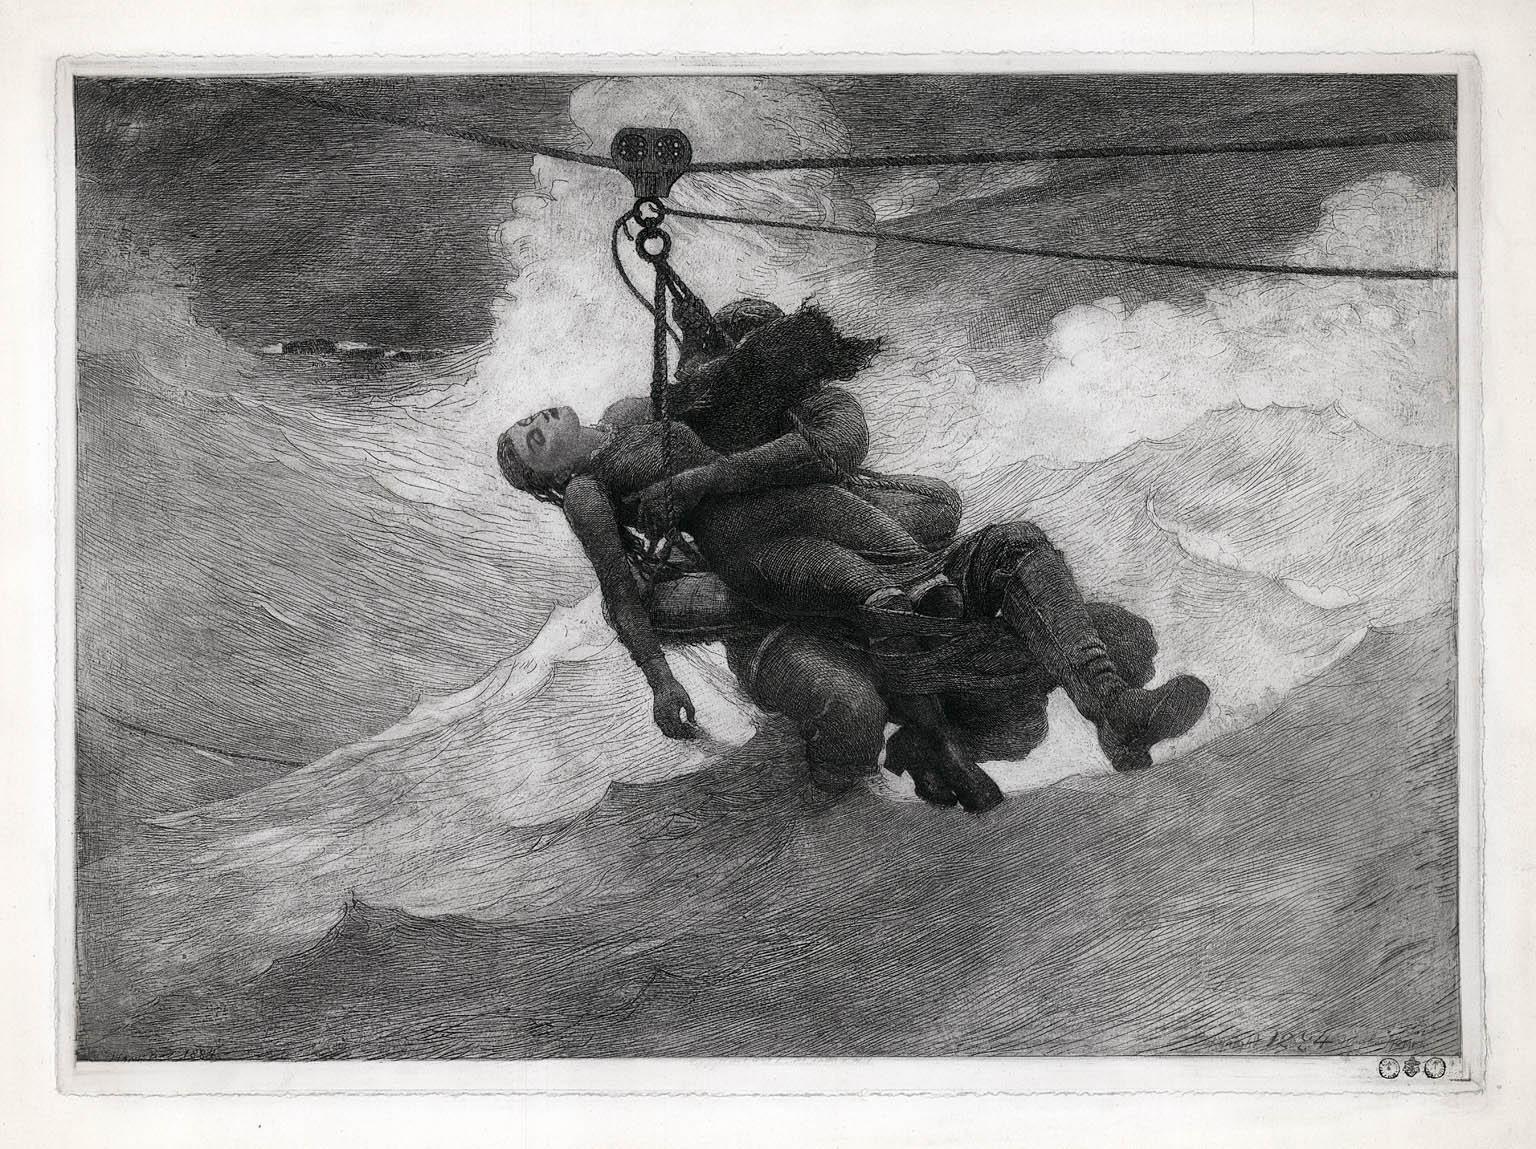 Winslow Homer Print - The Life Line